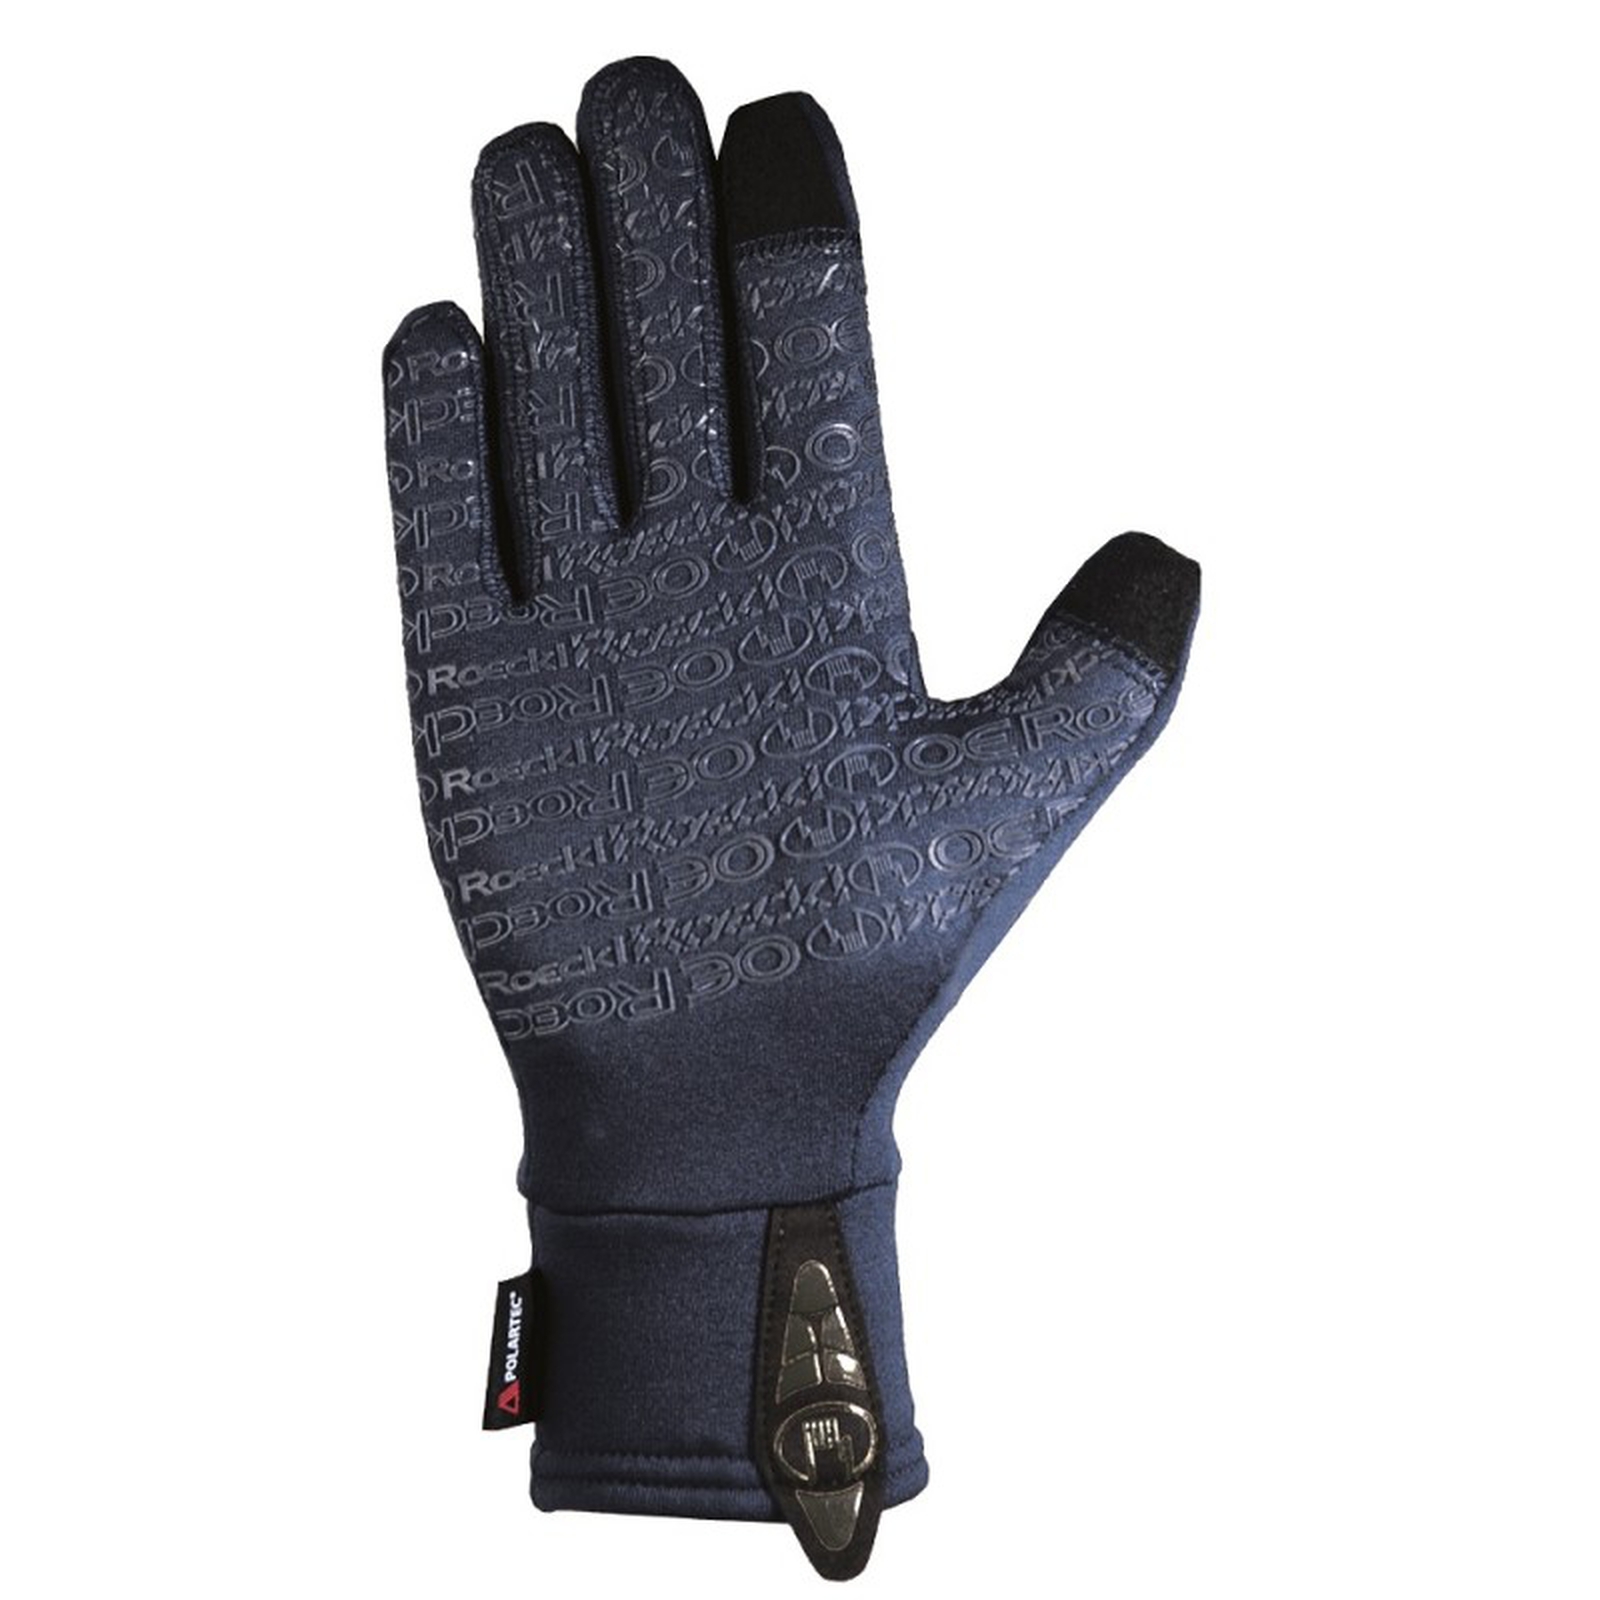 Roeckl Weldon Polartec Power Stretch Handschuhe kaufen